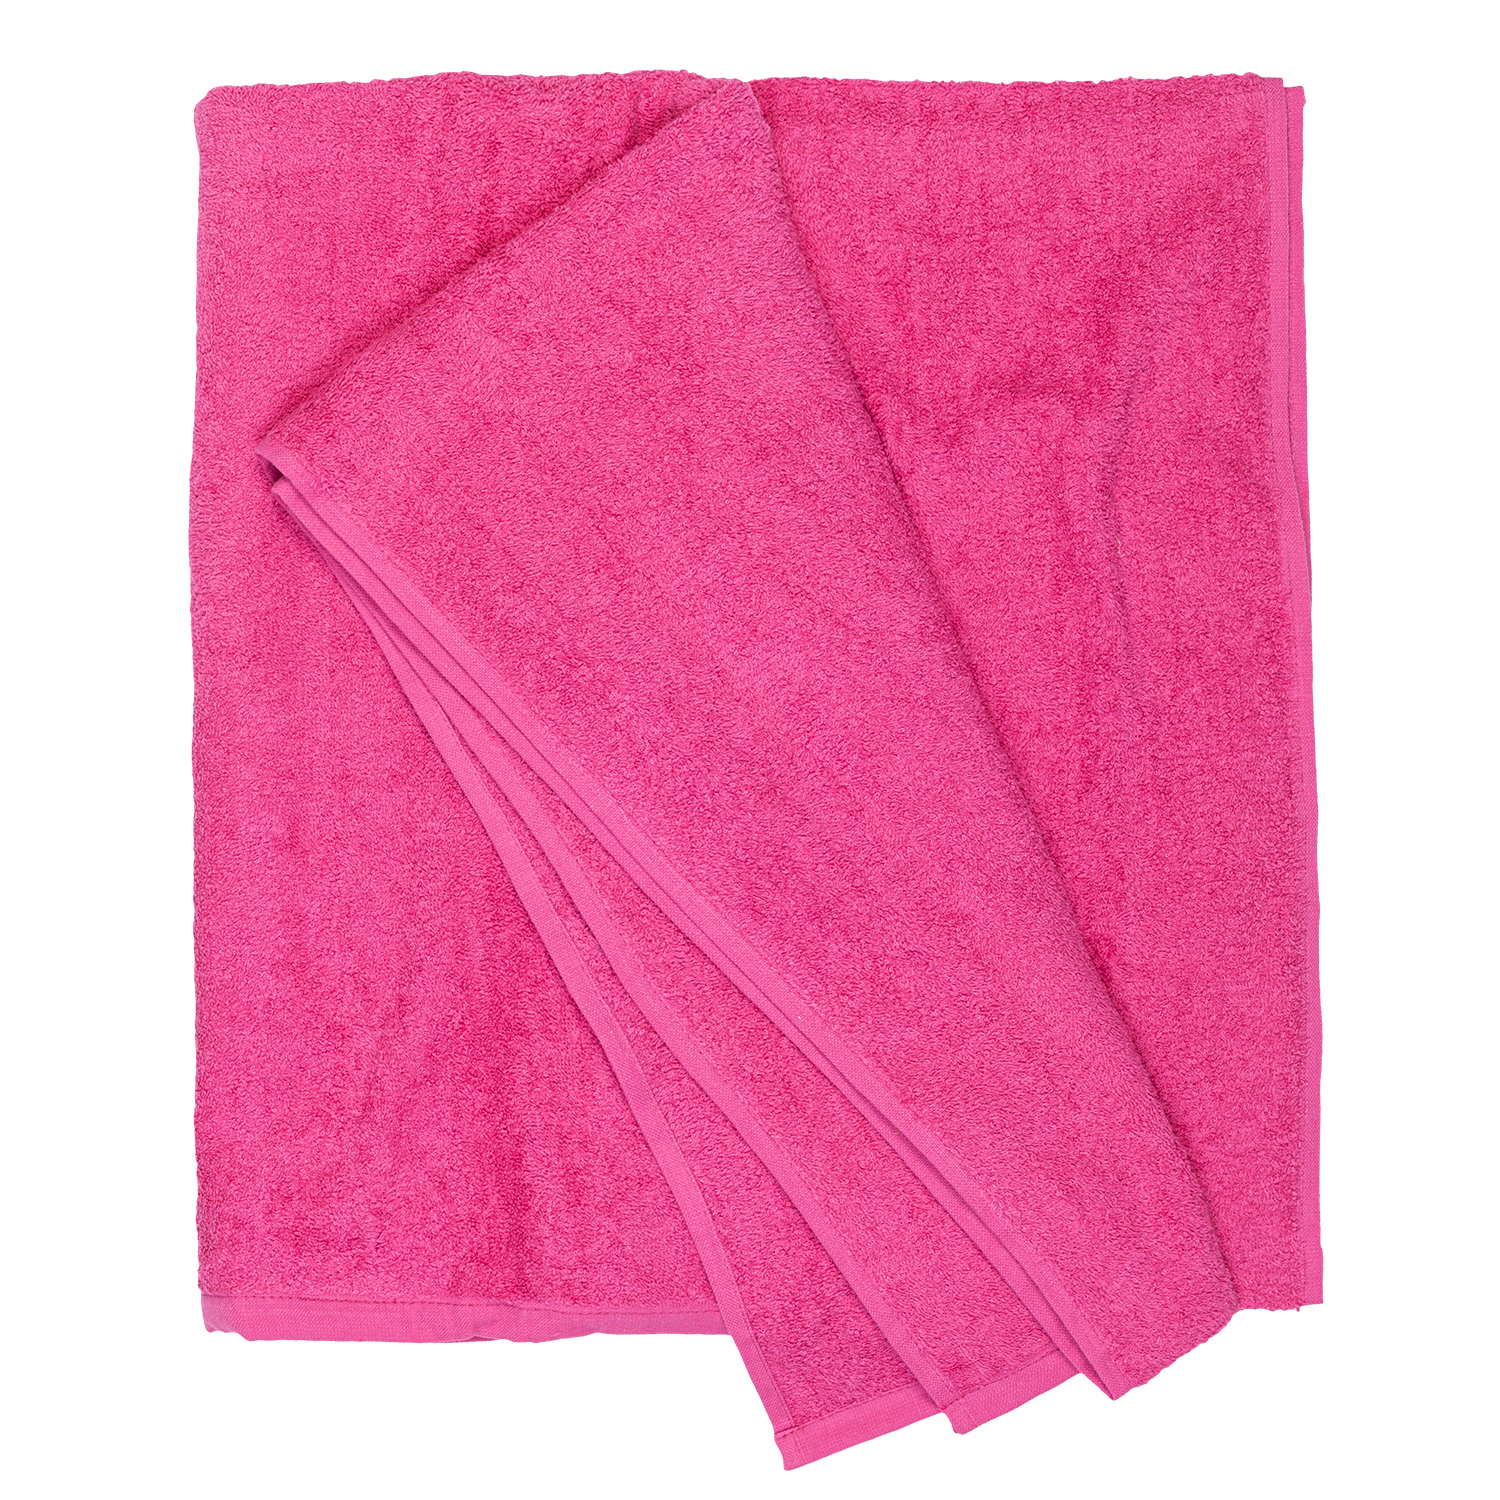 Bath towel series Helsinki in pink by Adamo in large sizes 100x220 cm or 155x220 cm